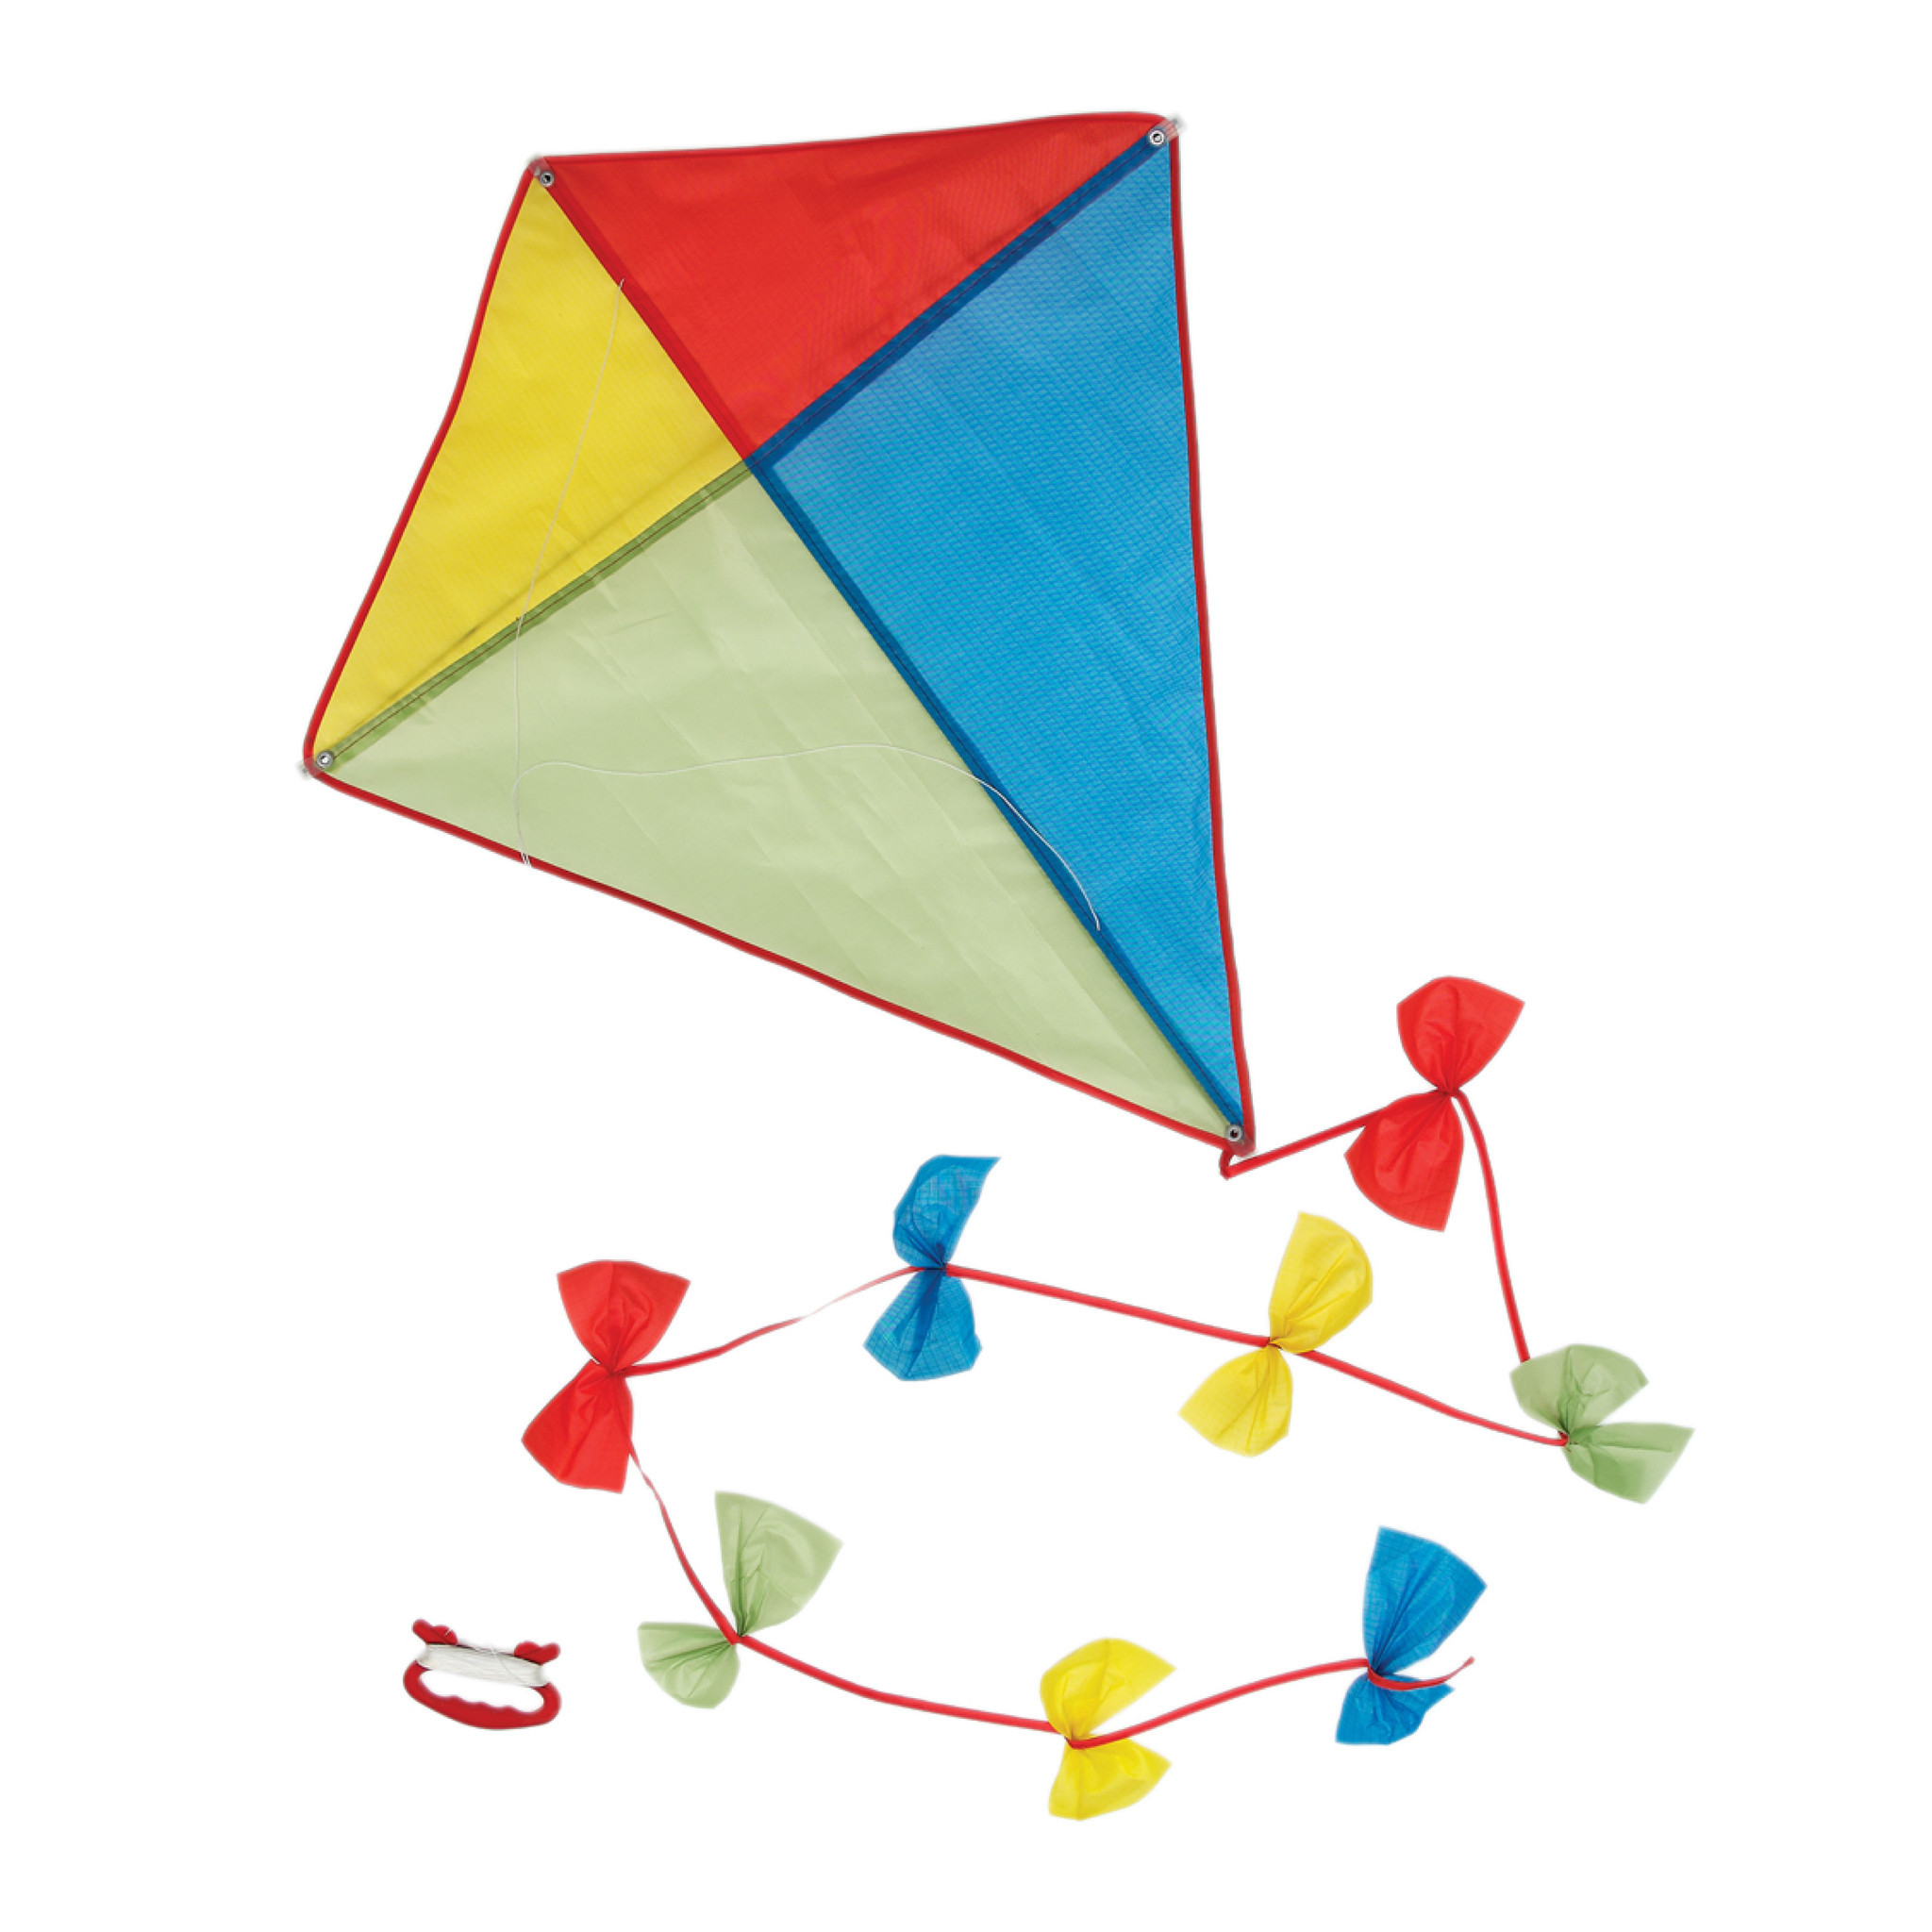 kite shape clipart - photo #50